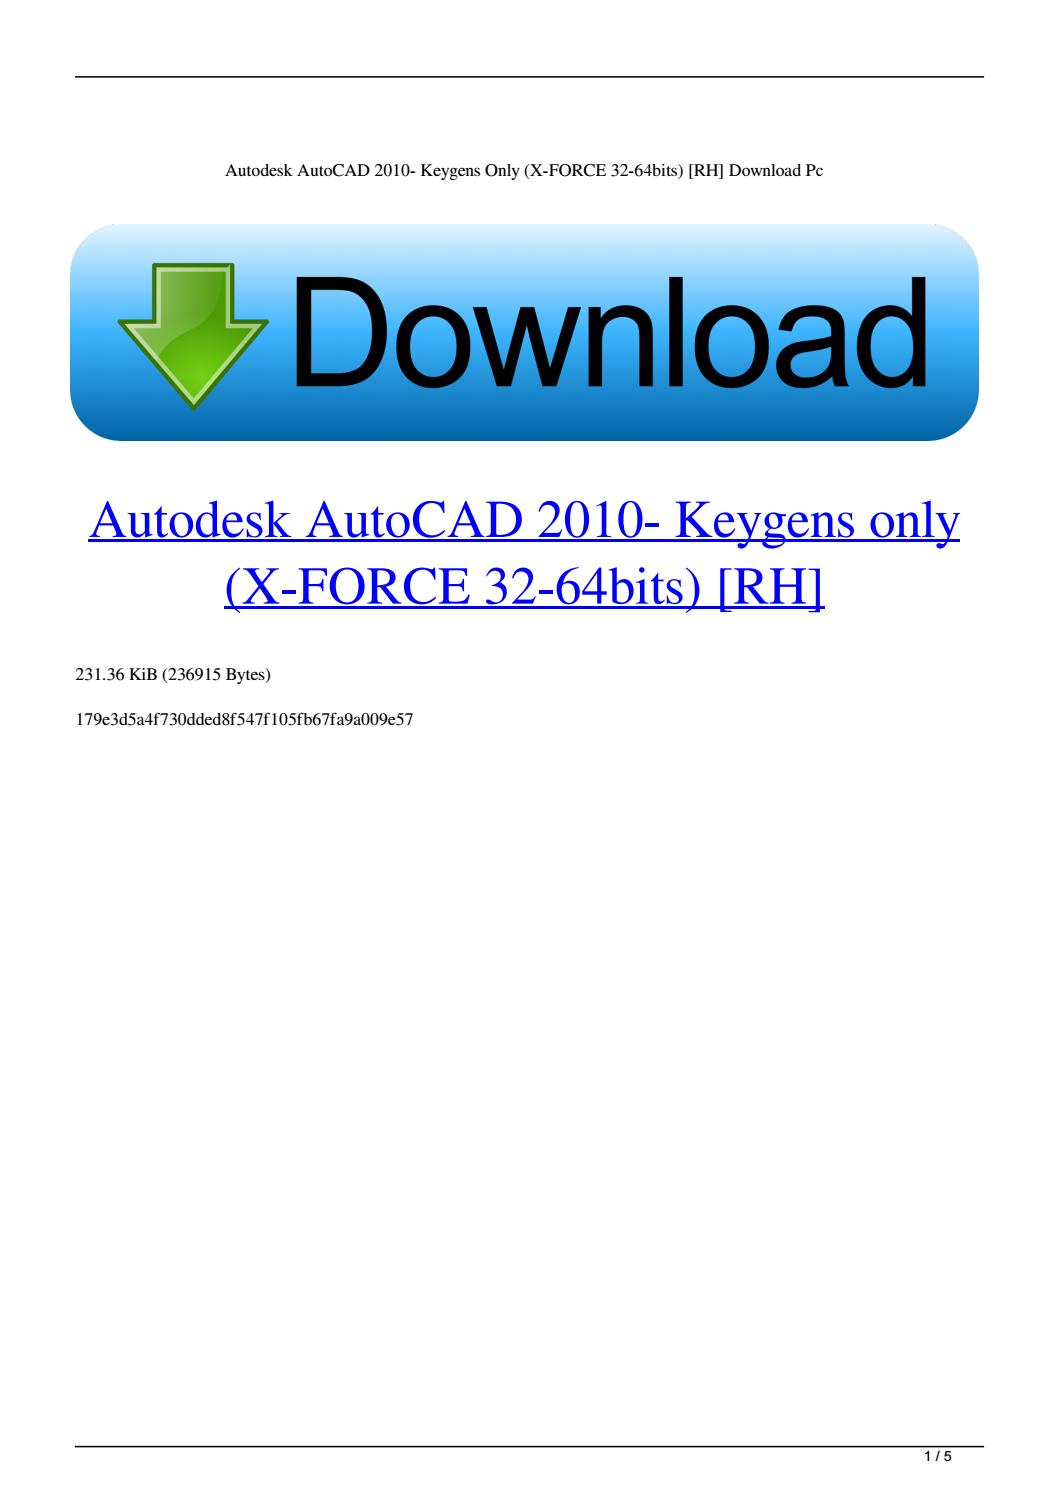 Xforce Keygen For Autocad 2010